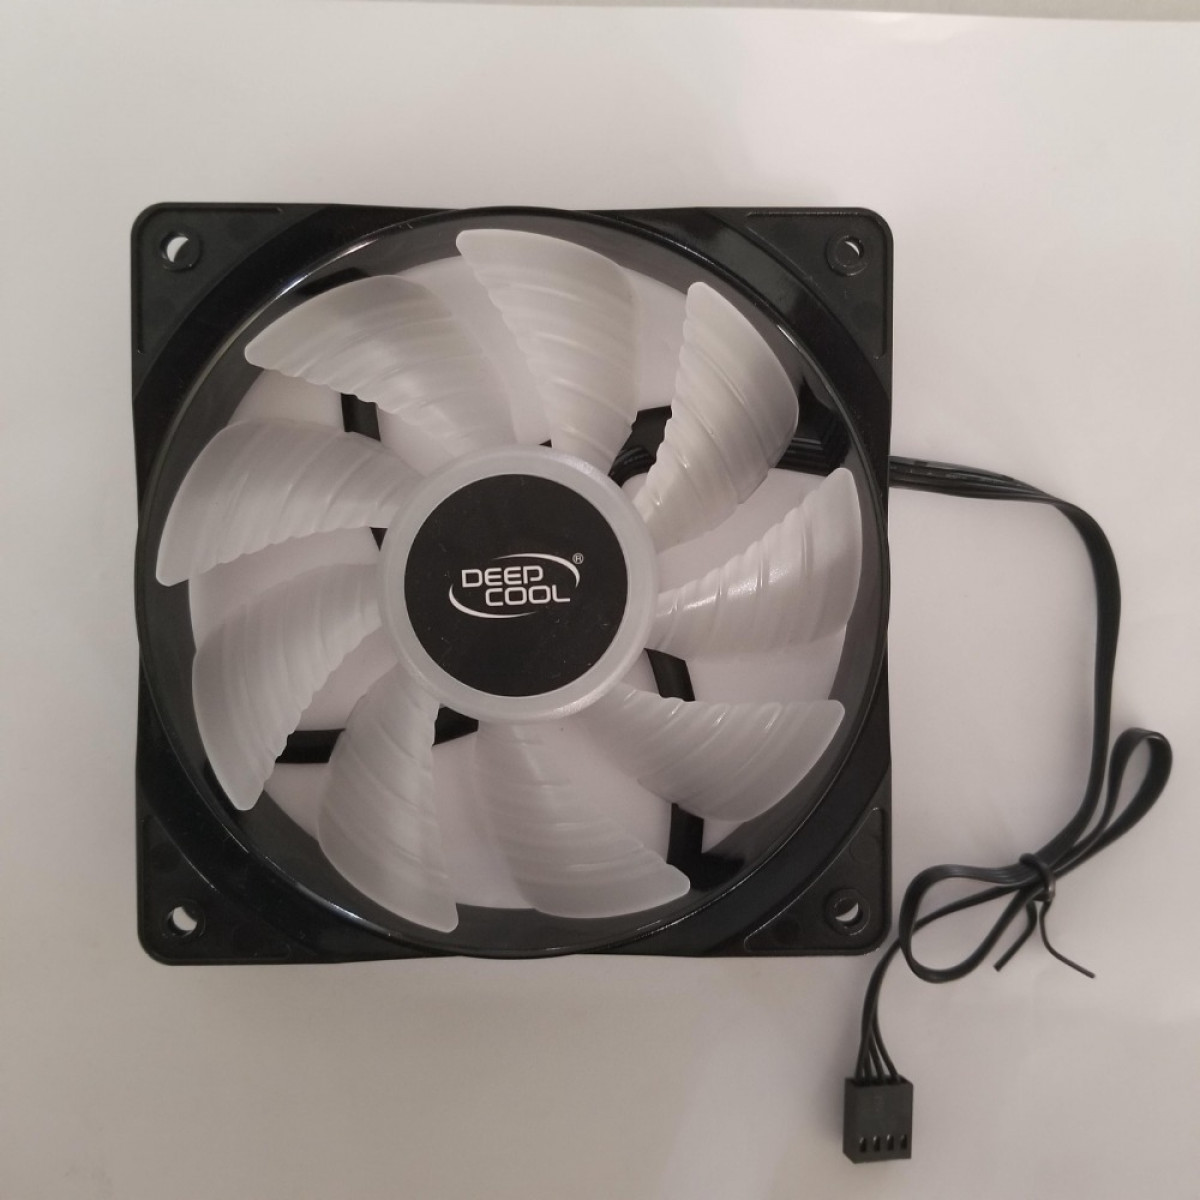 DeepCool Deep Cool 12cm PWM Kipas Casing RGB Fan Case